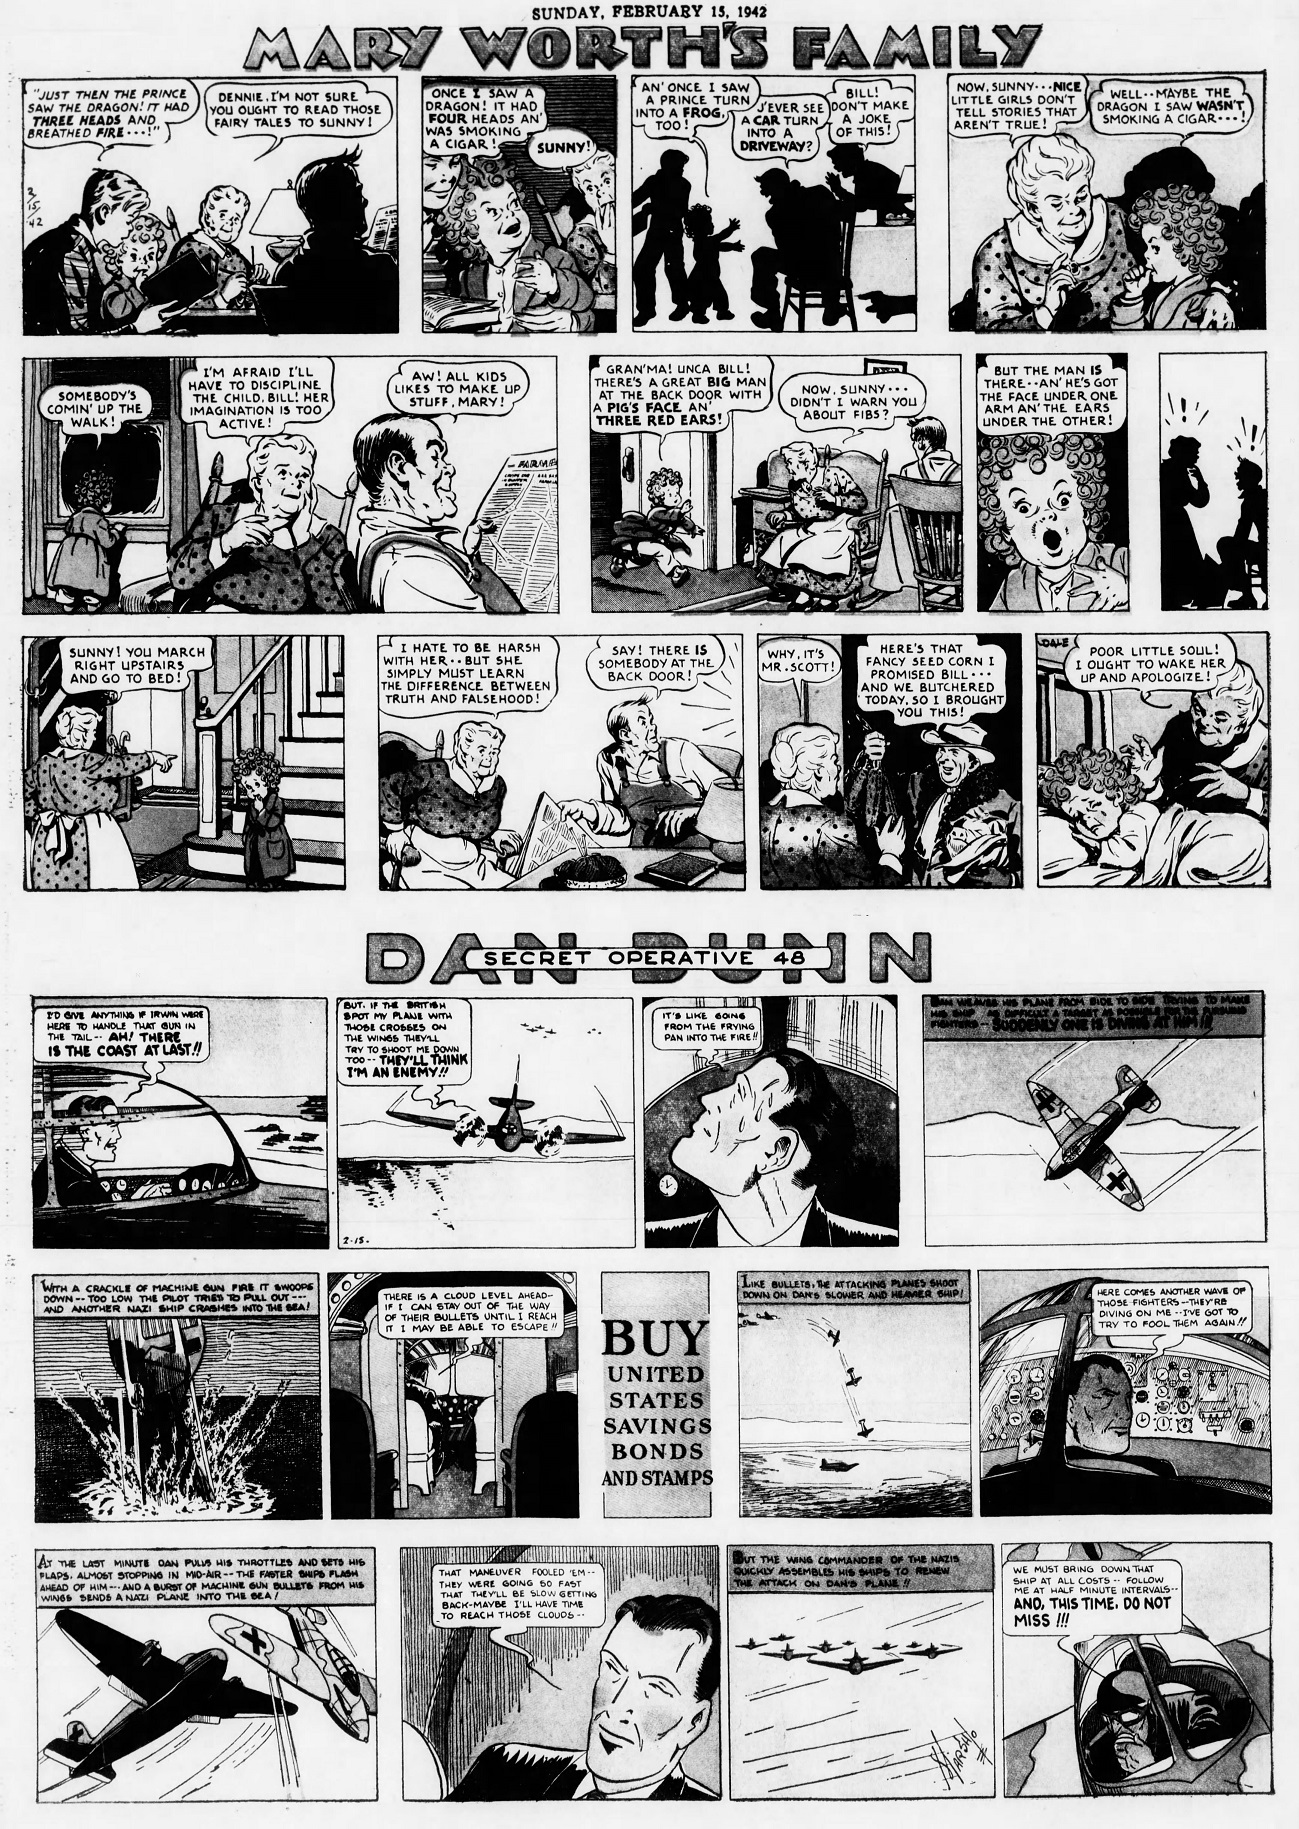 The_Brooklyn_Daily_Eagle_Sun__Feb_15__1942_(9).jpg